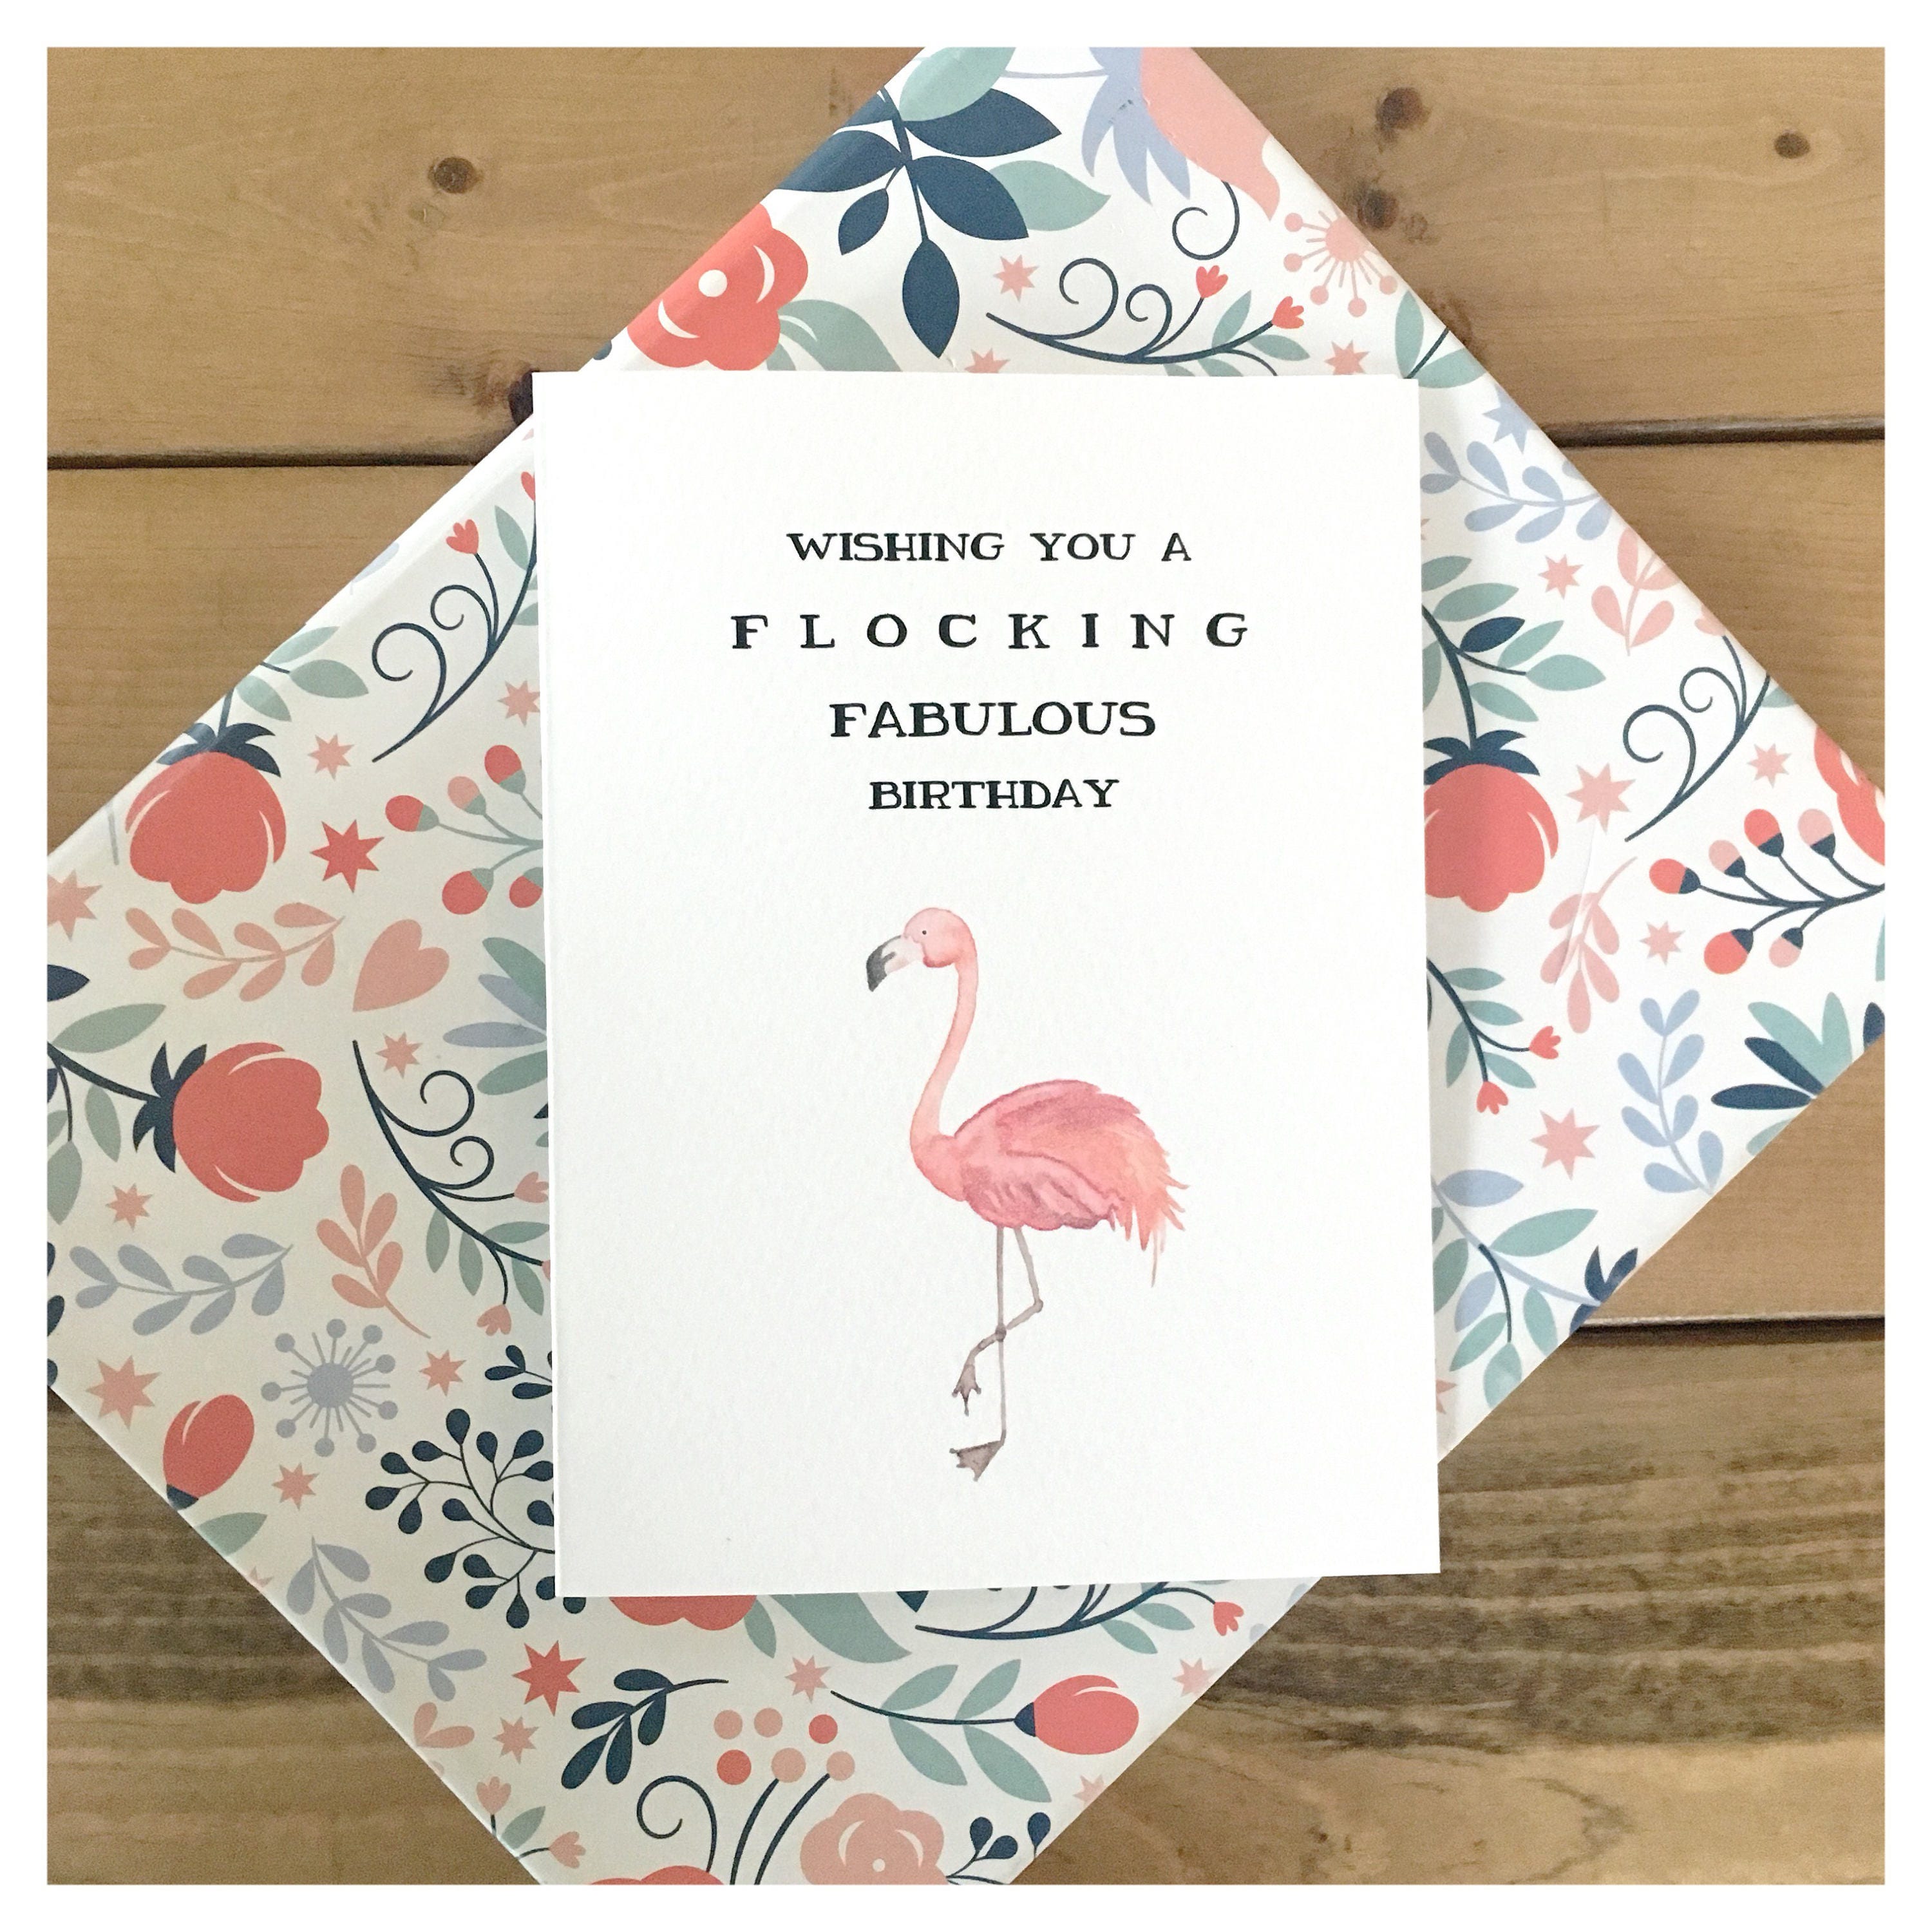 flocking-birthday-flamingo-birthday-card-flamingo-card-flamingo